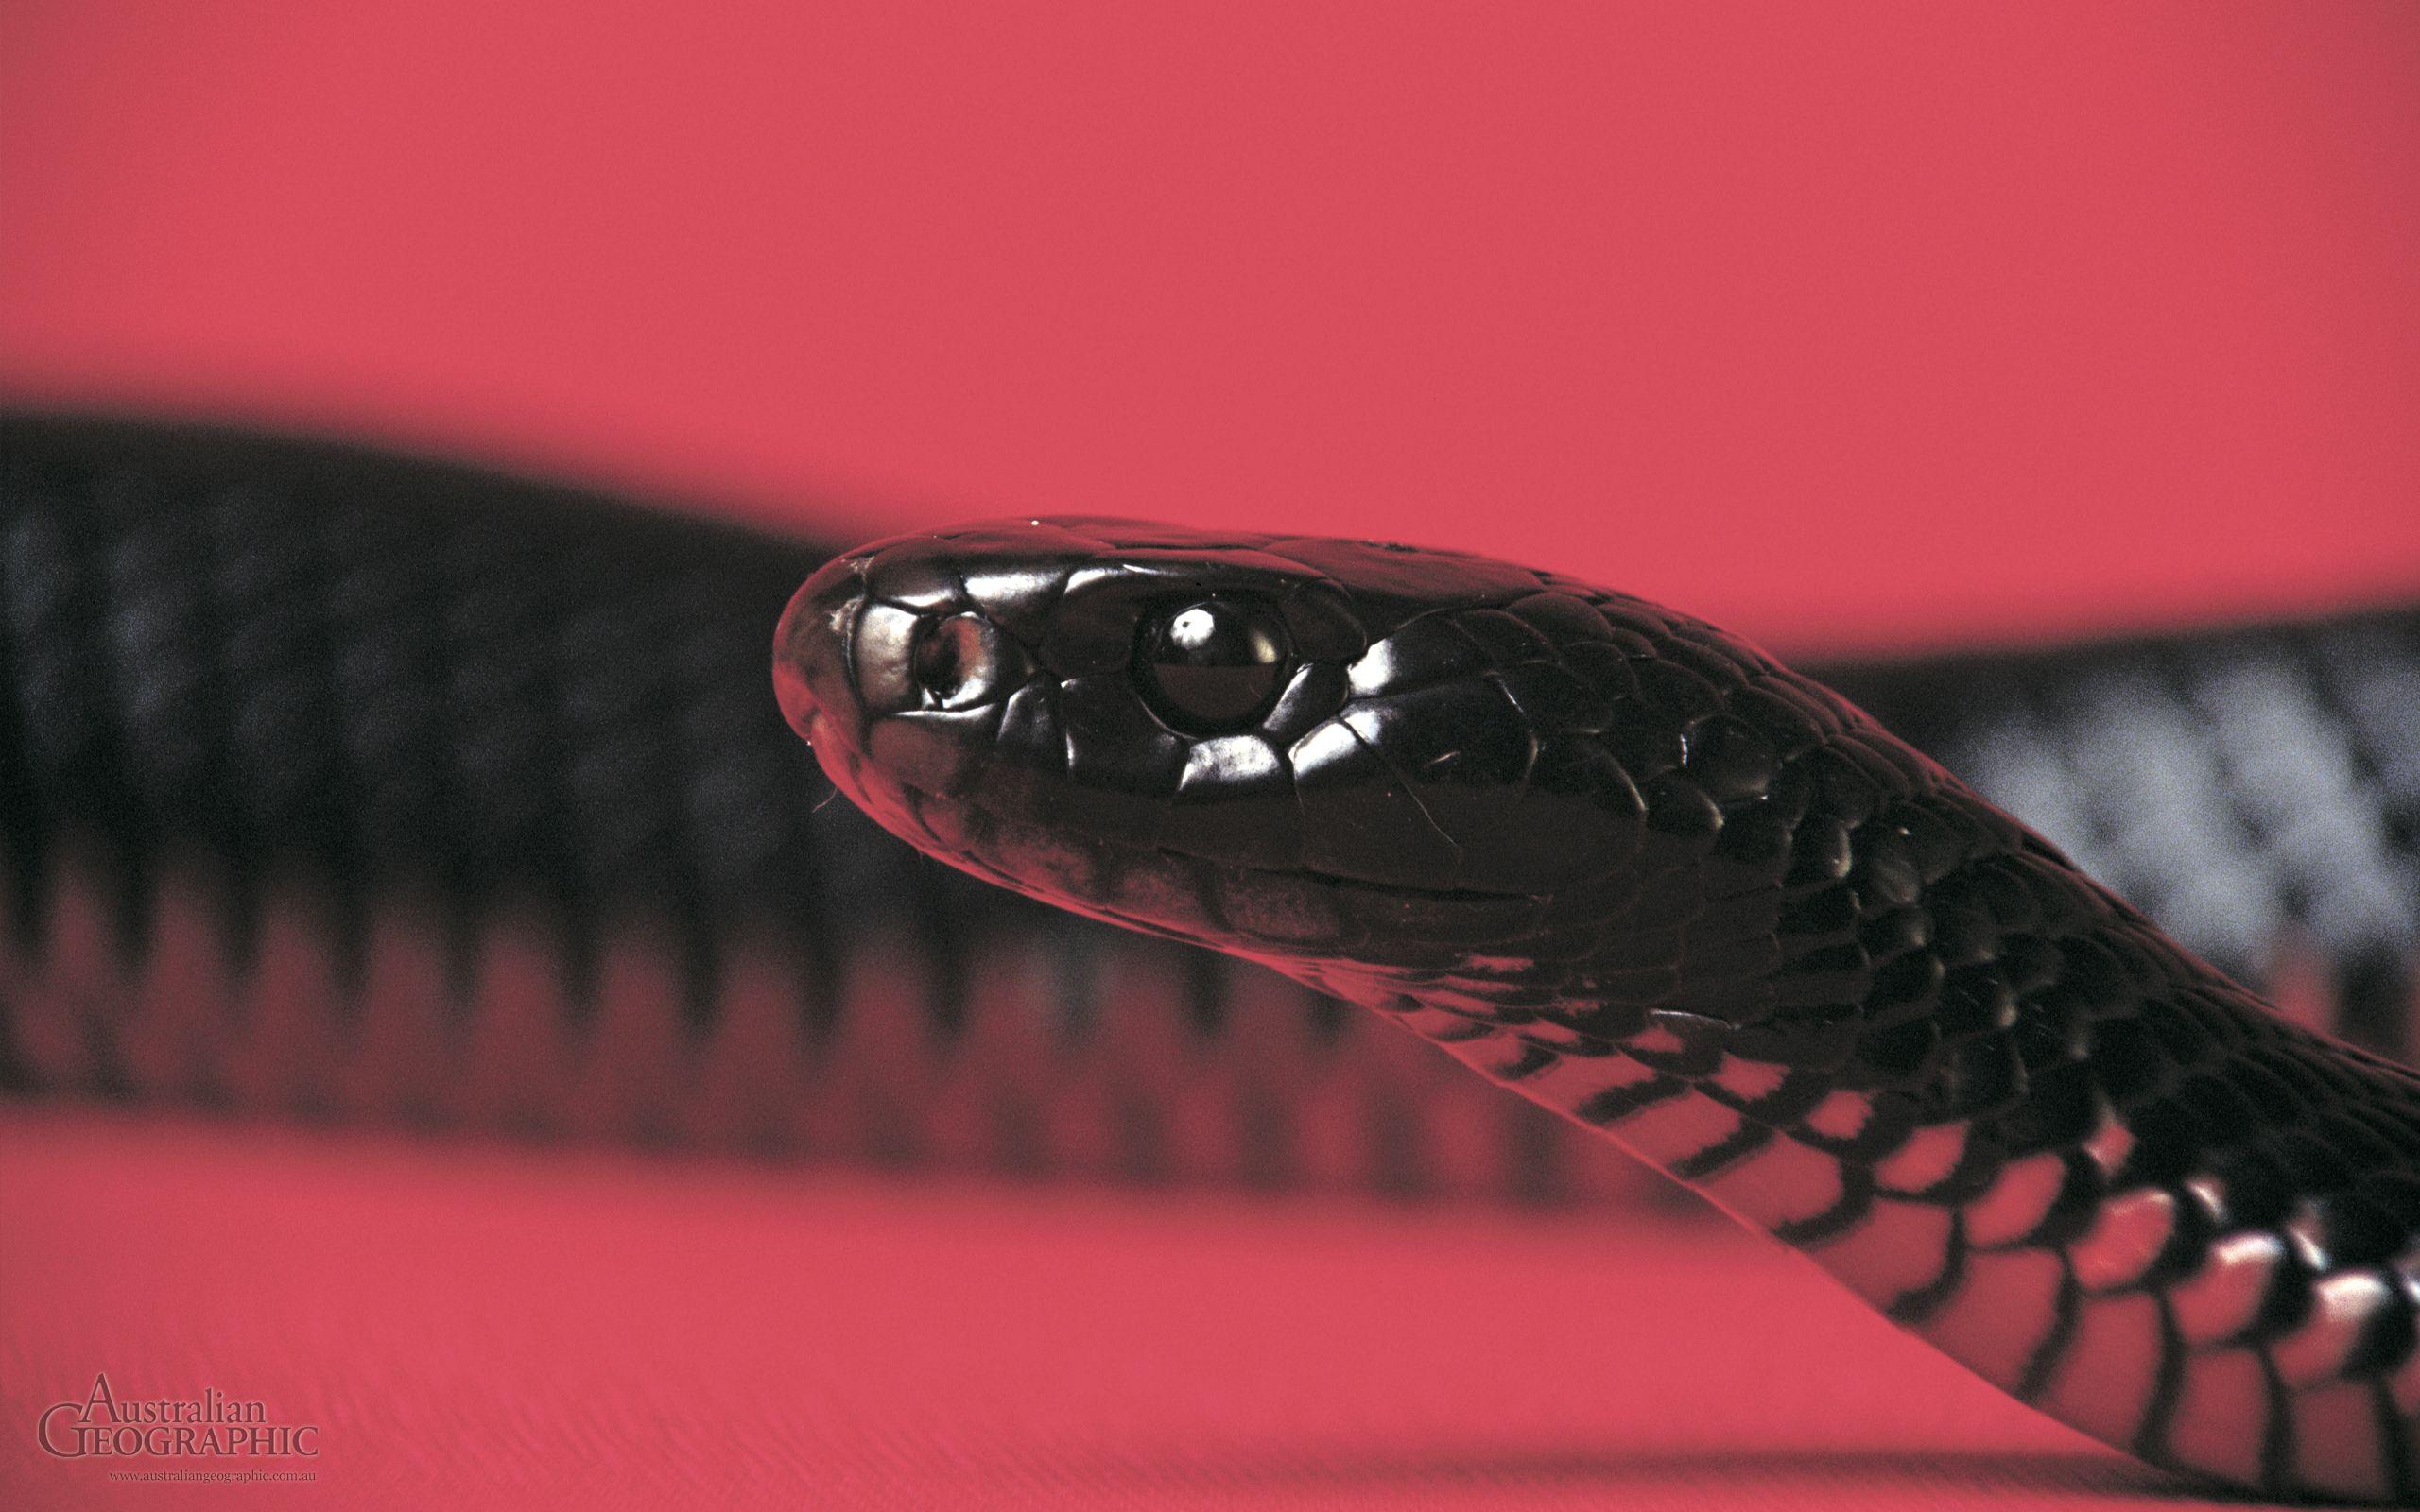 The Snake Stud – IAMELENI